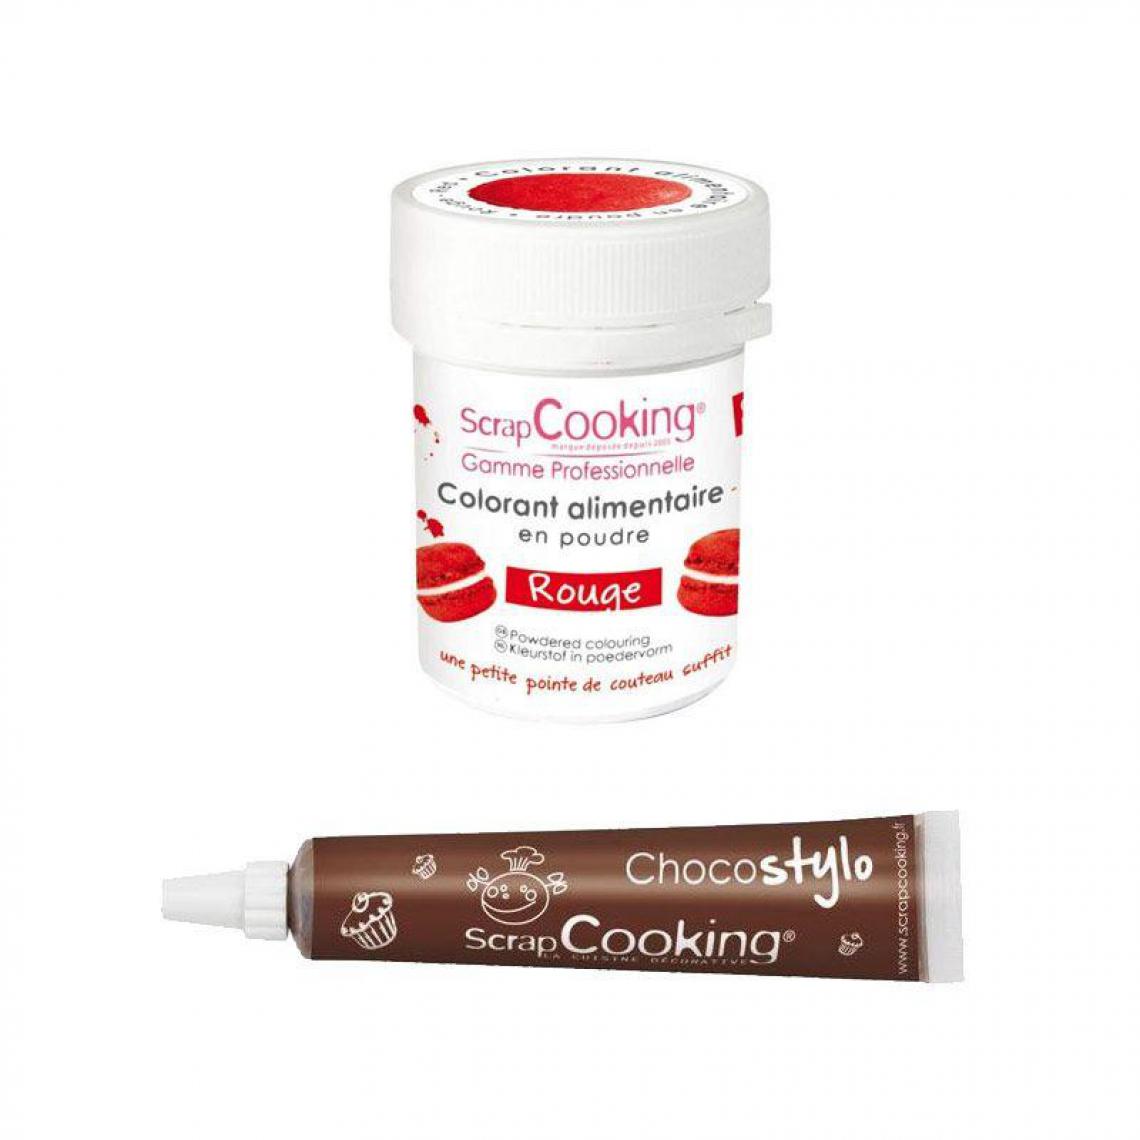 Scrapcooking - Stylo chocolat + Colorant alimentaire Rouge - Kits créatifs